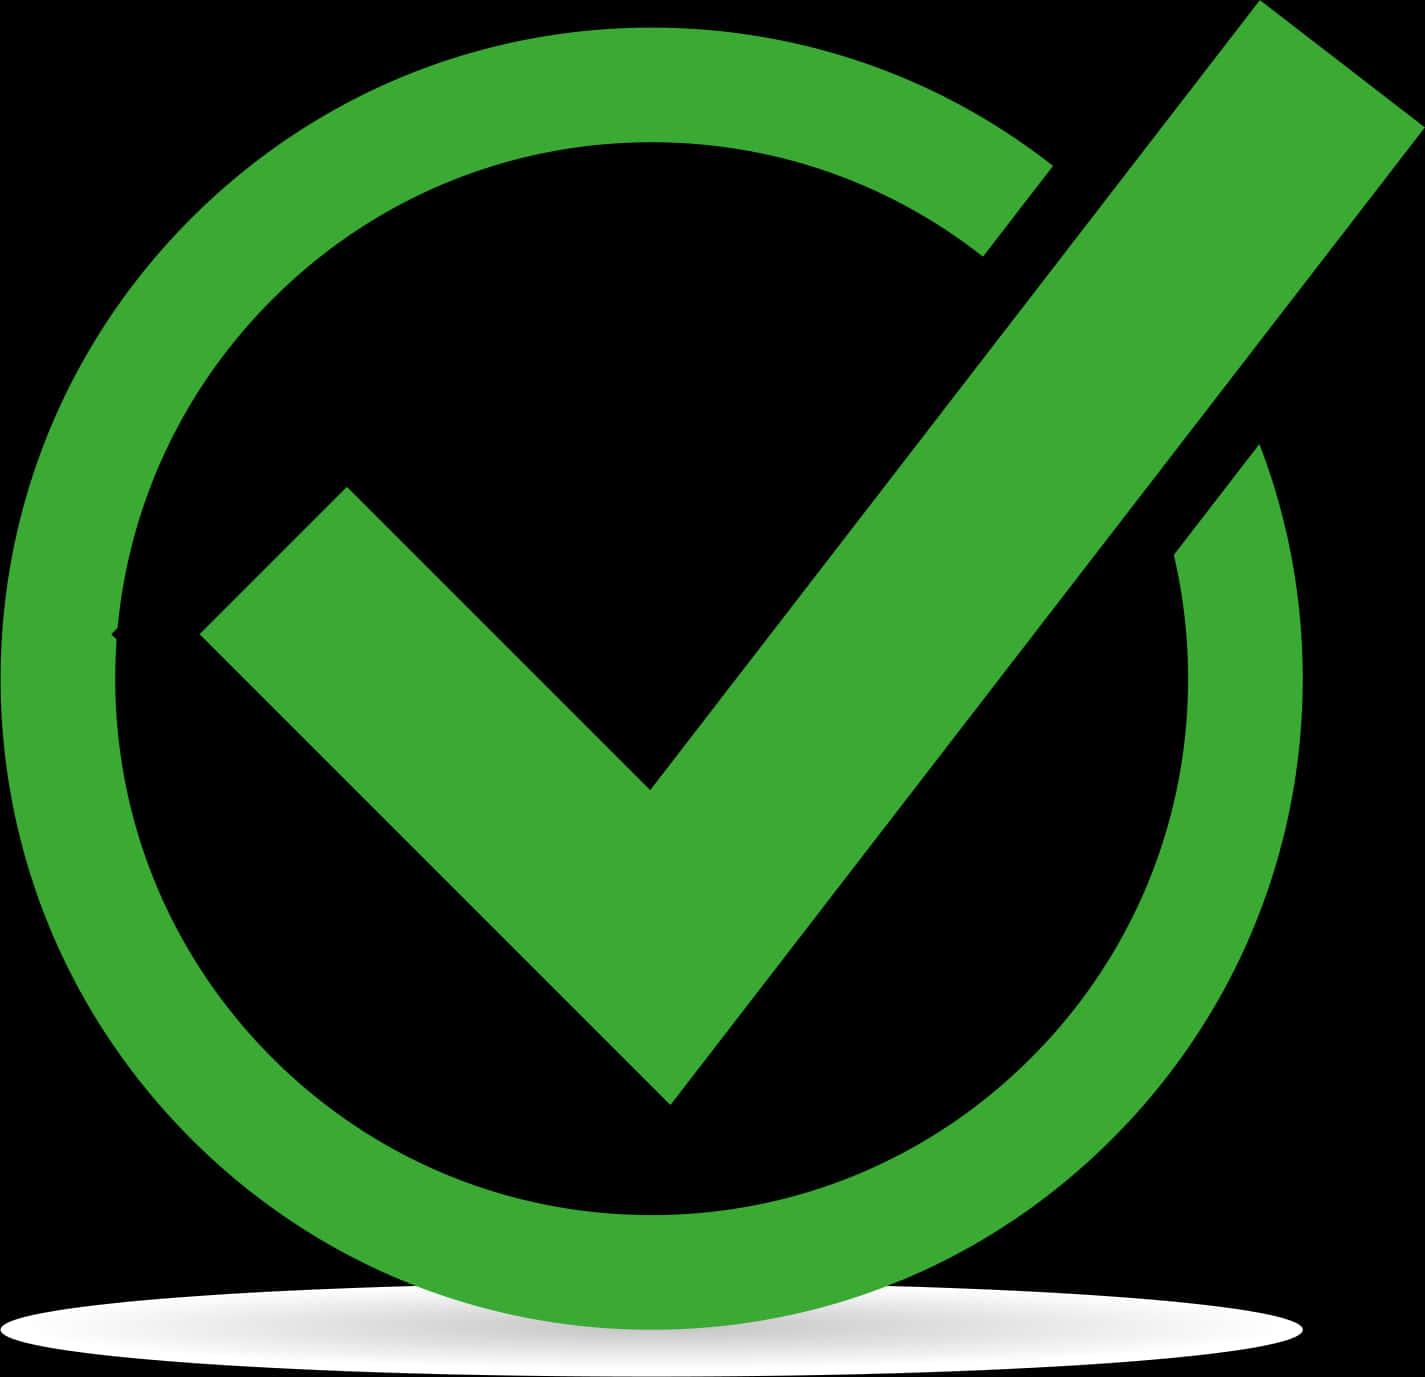 A Green Check Mark In A Circle